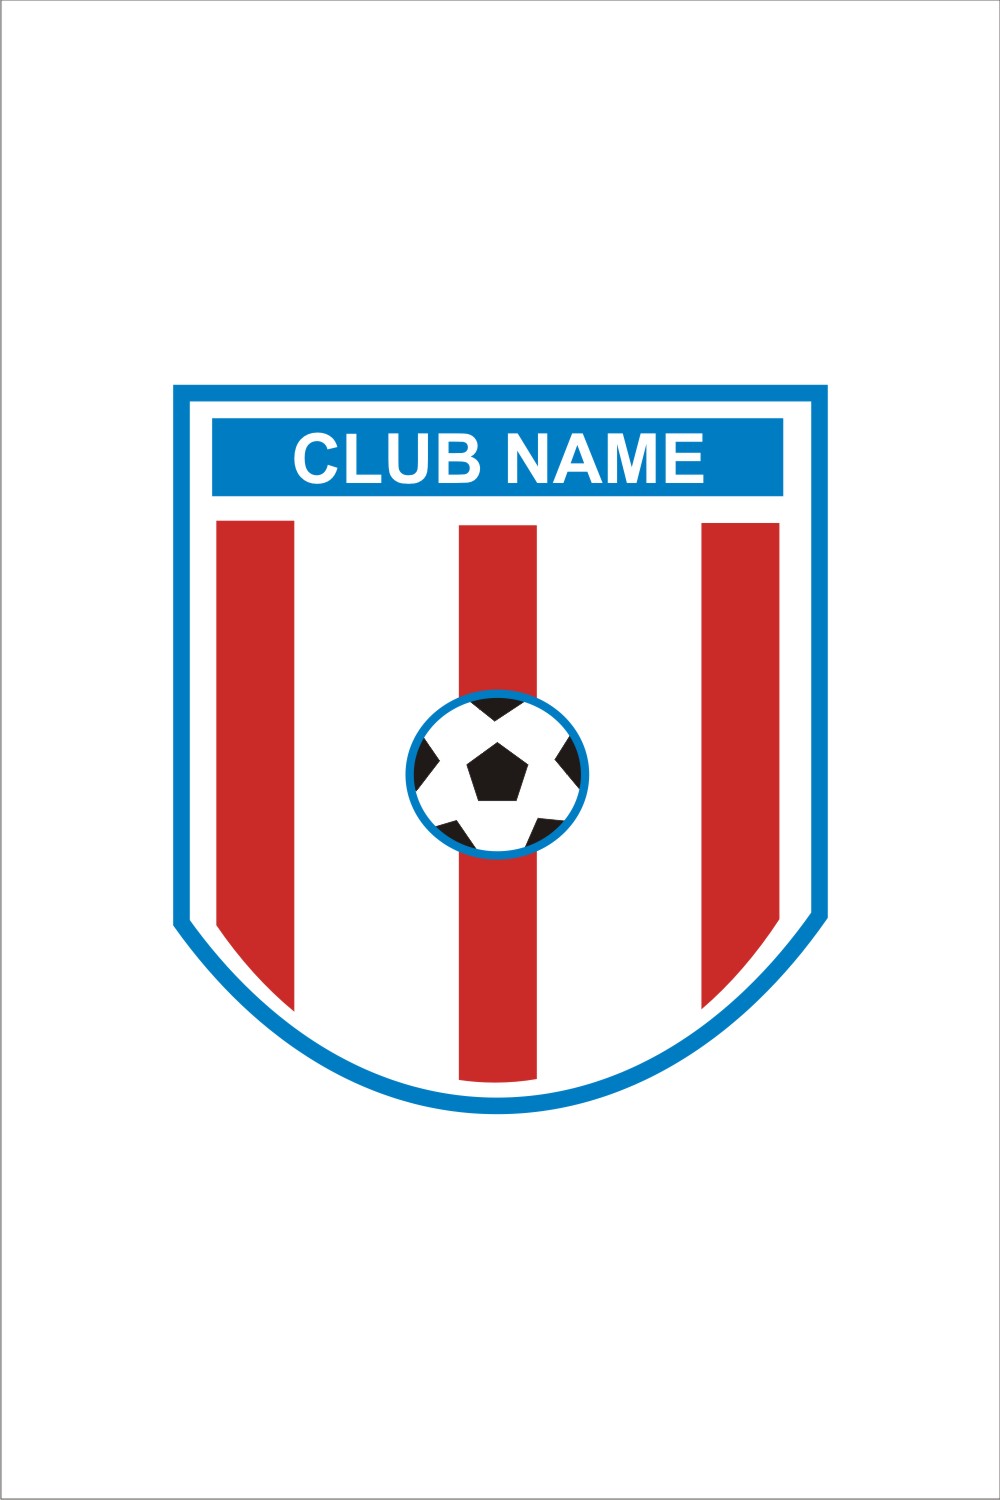 club logo pinterest preview image.